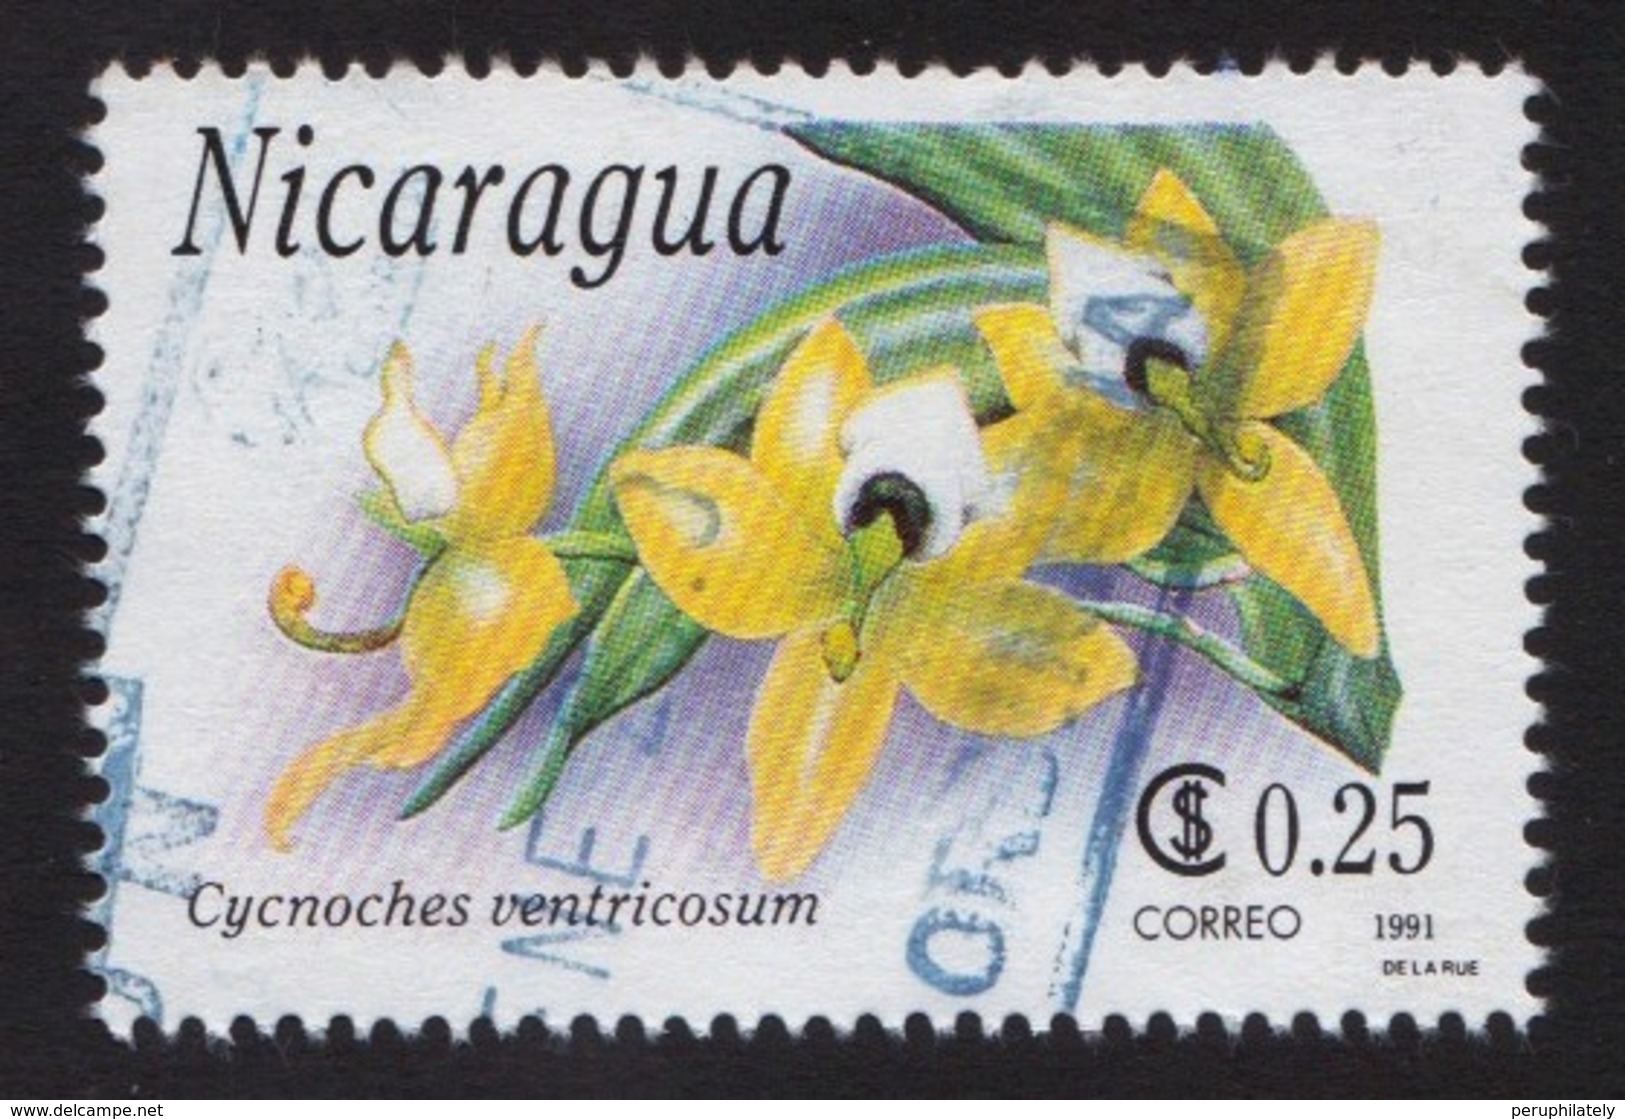 Nicaragua 1991, Orchids, V2, Used - Nicaragua